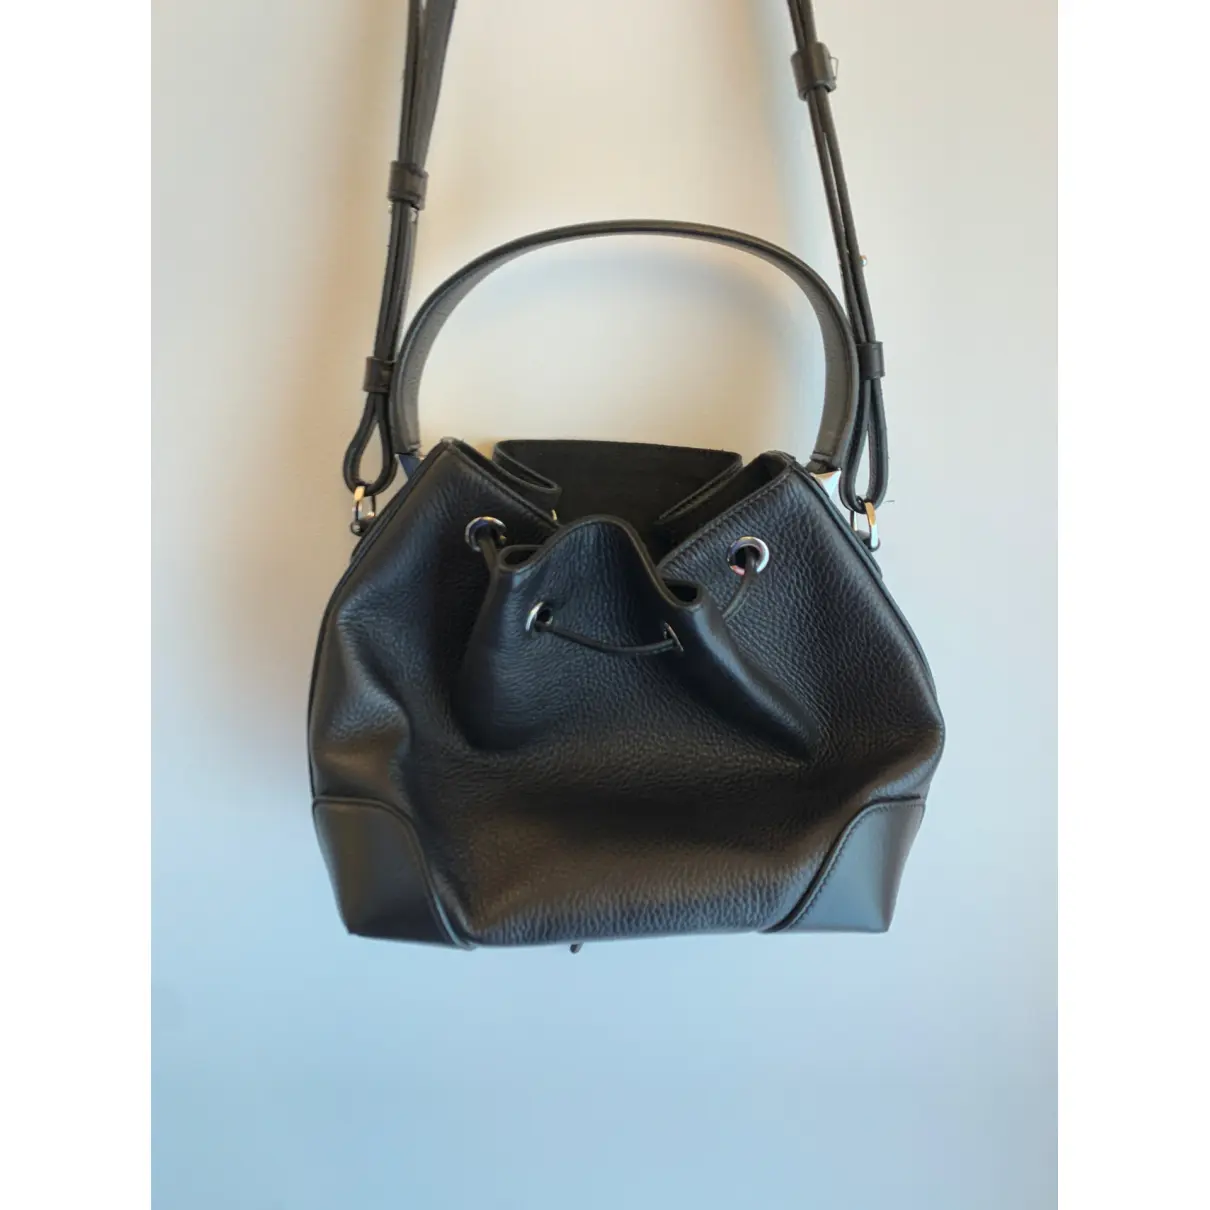 Buy Givenchy Leather handbag online